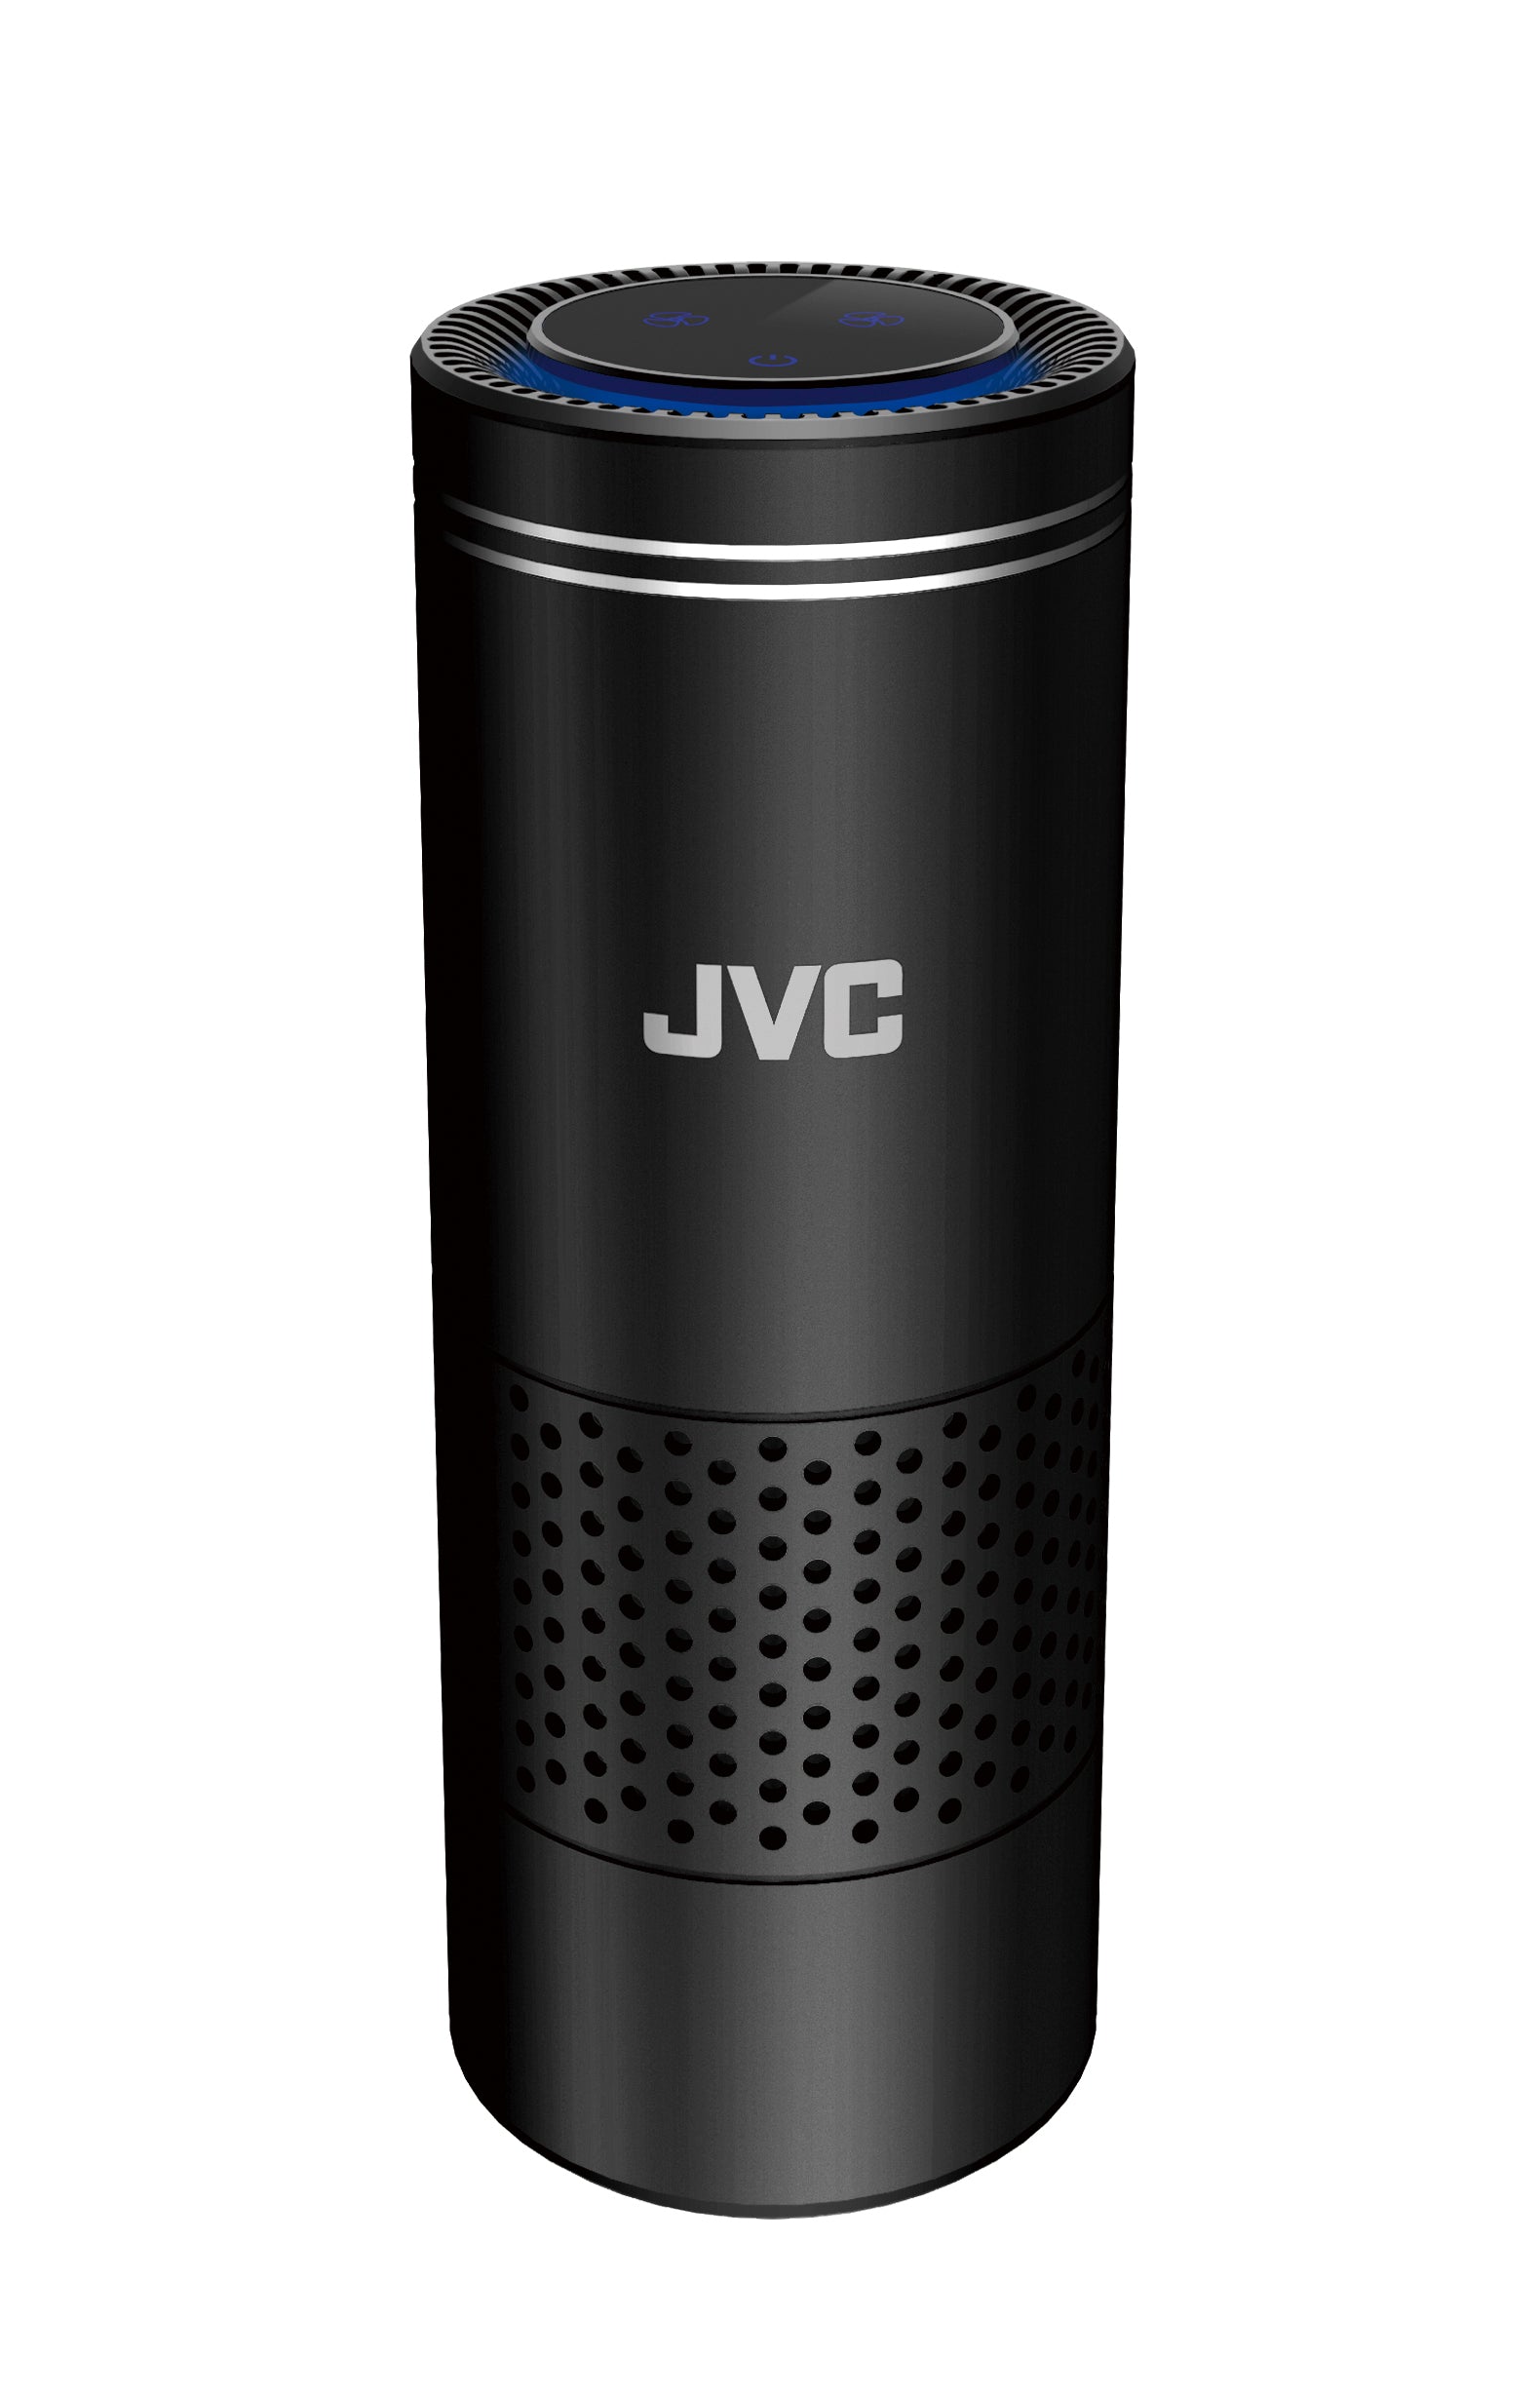 JVC KS-GA100 purificatore d'aria per auto